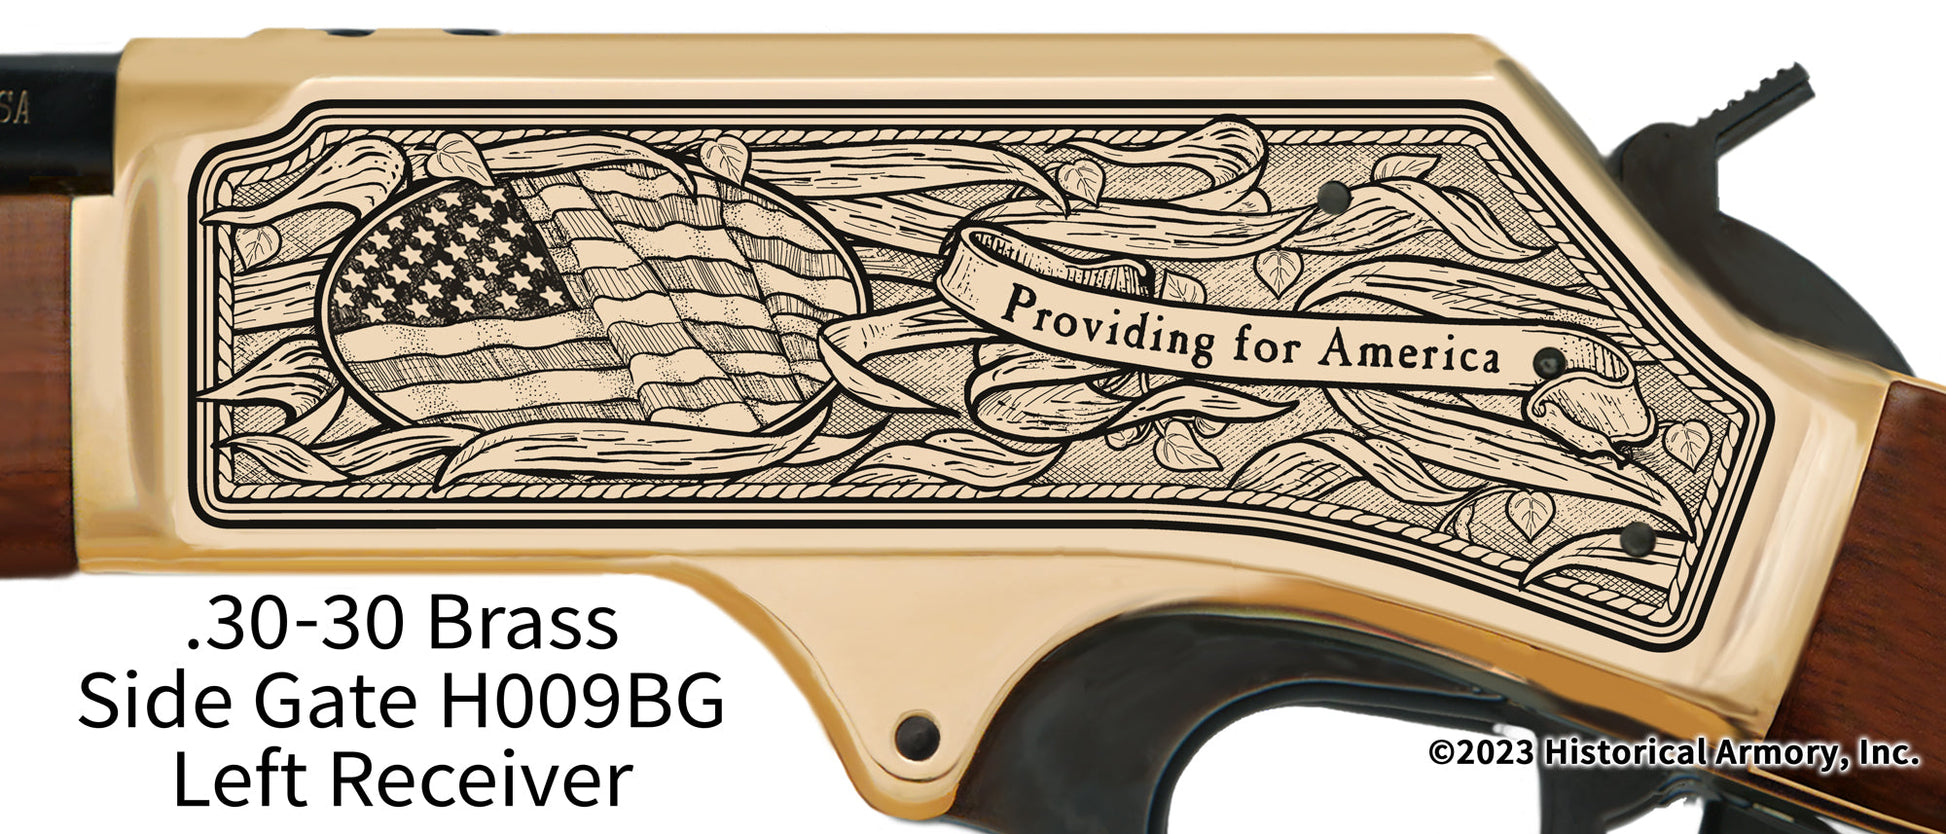 North Dakota Agricultural Heritage Engraved Henry .30-30 Brass Side Gate H009BG Rifle